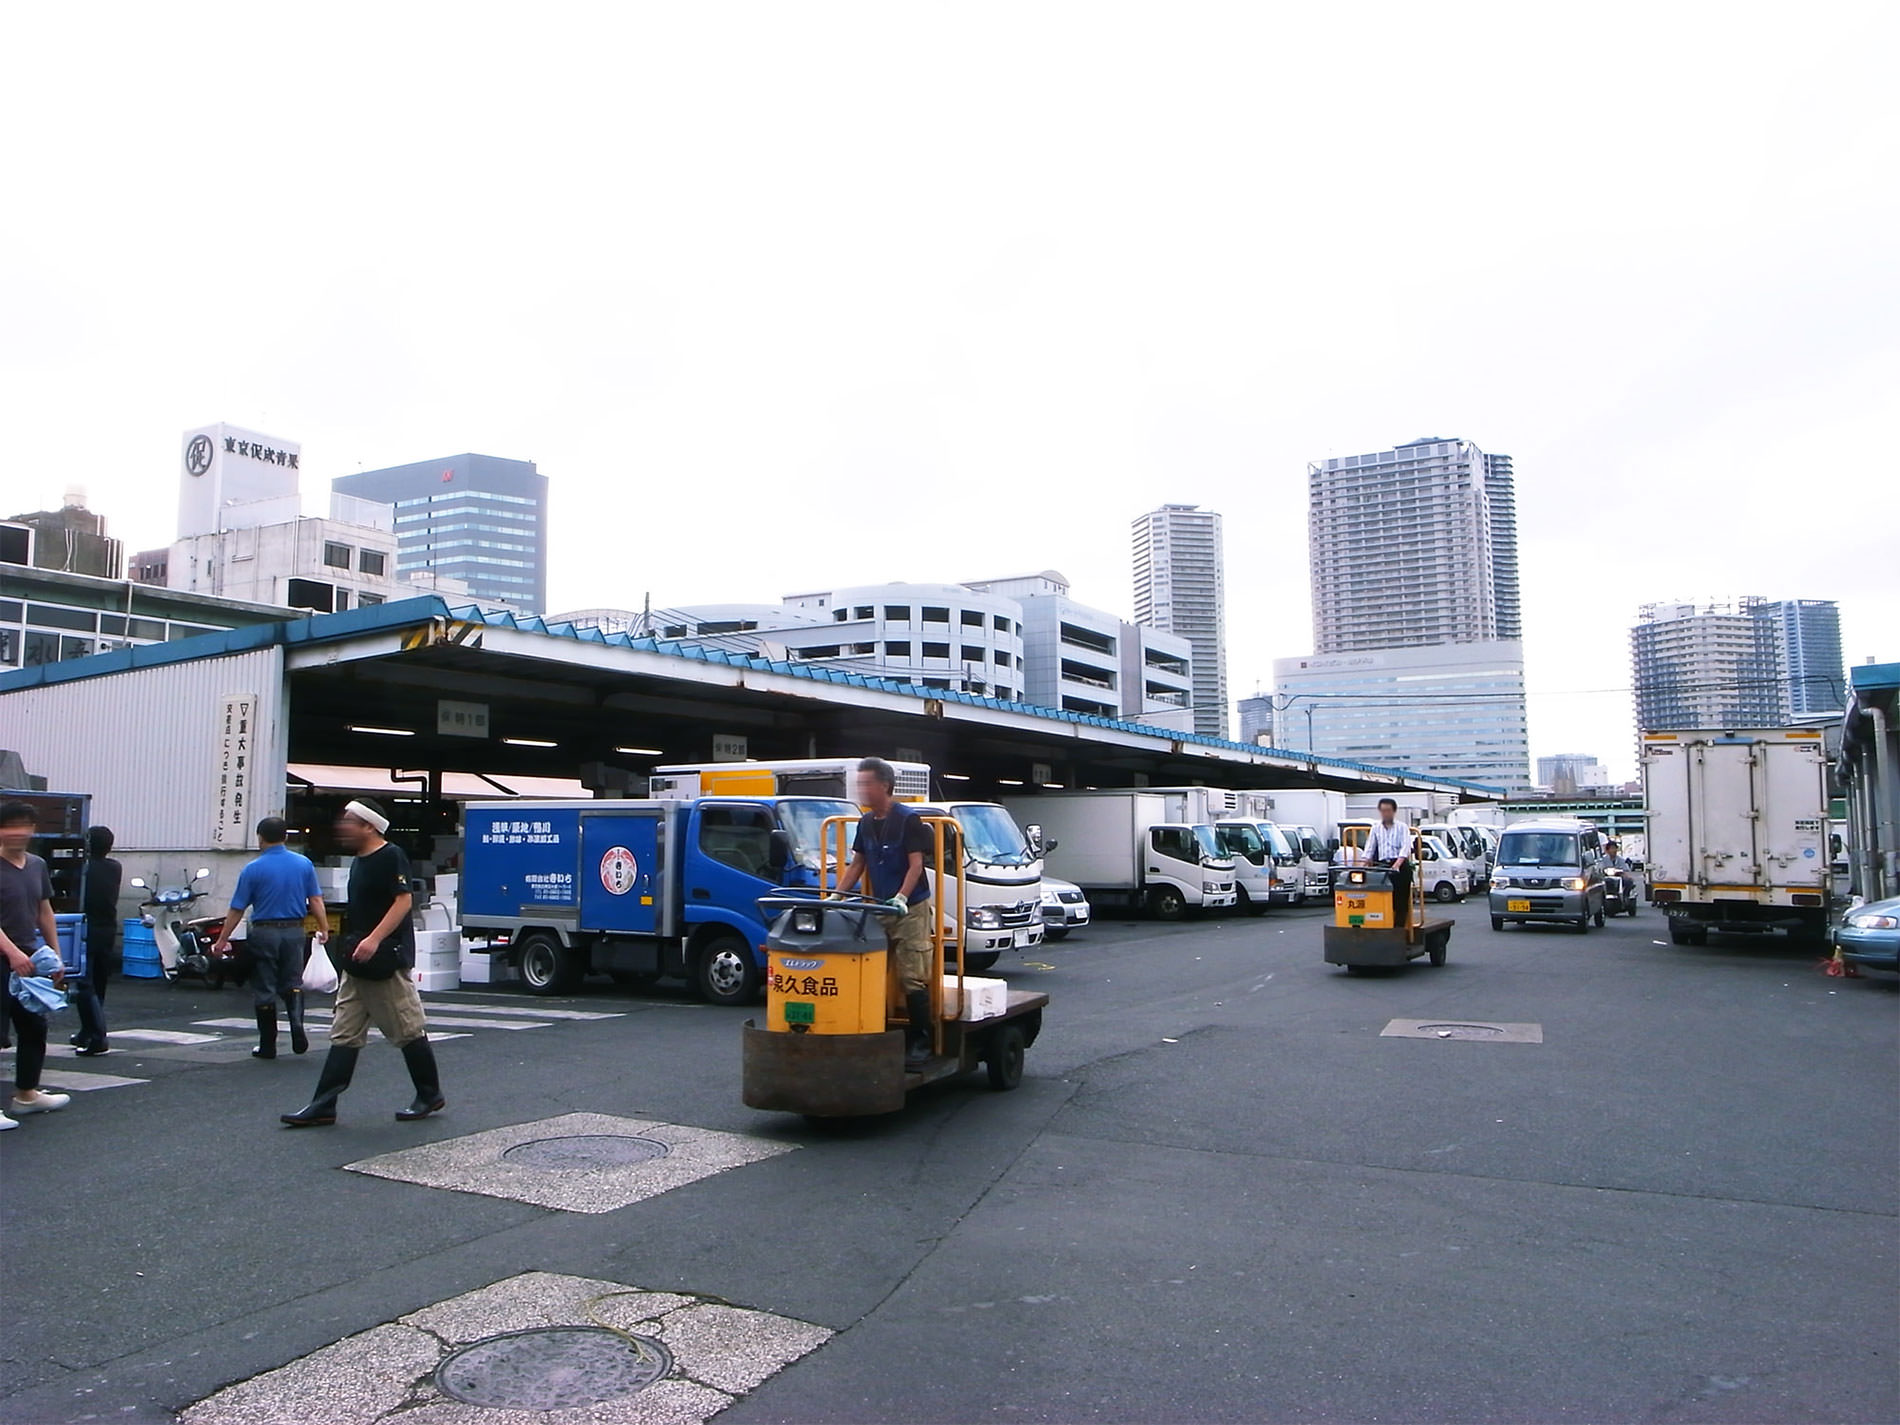 築地市場 2015 | Tsukiji Market Tokyo 2015